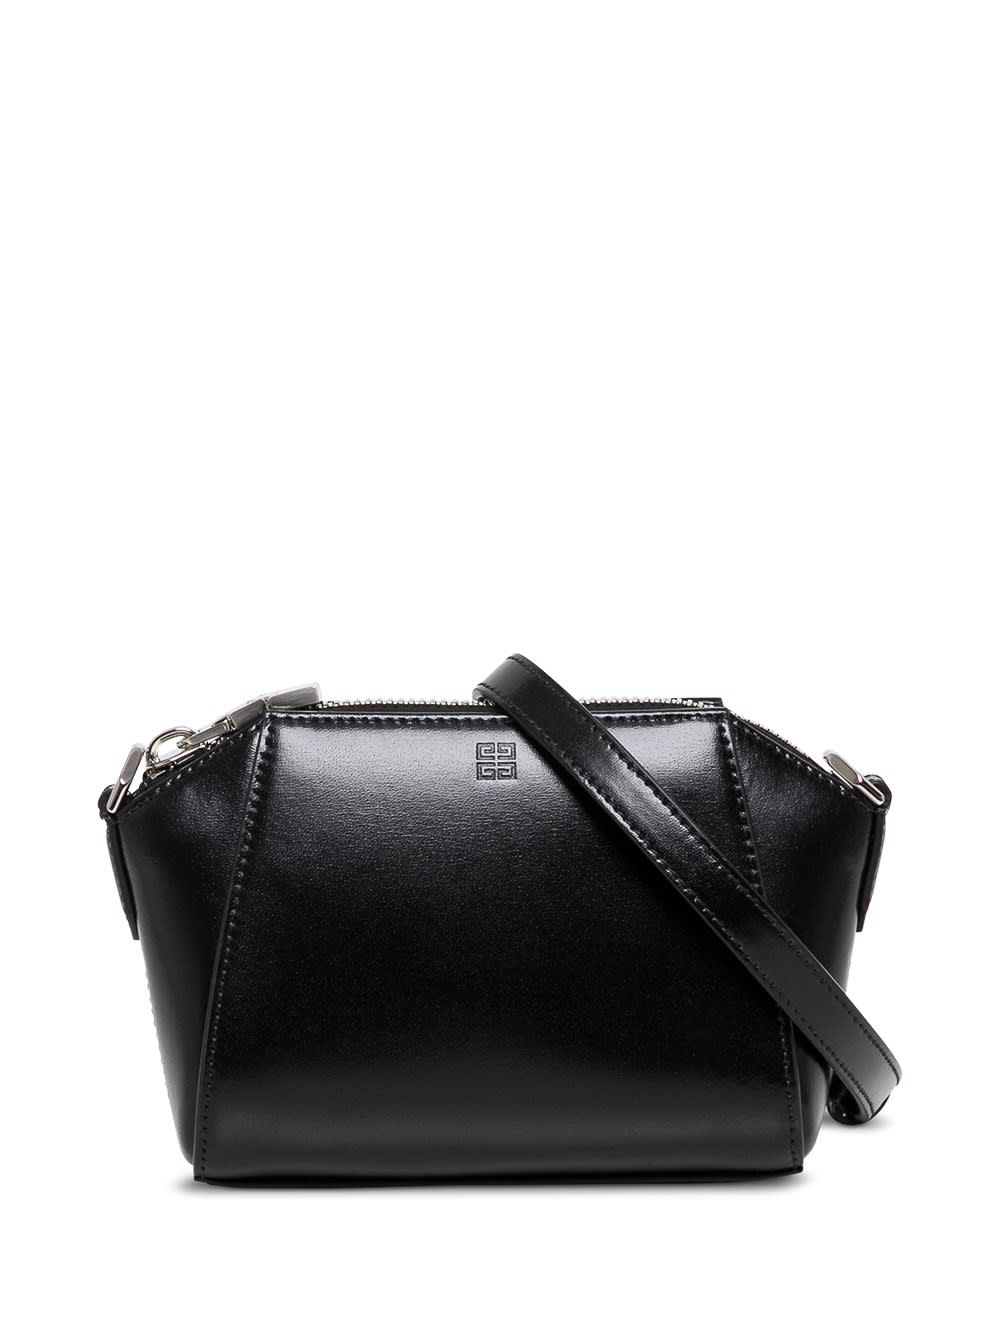 Givenchy Antigona Nano Crossbody Bag In Black Leather